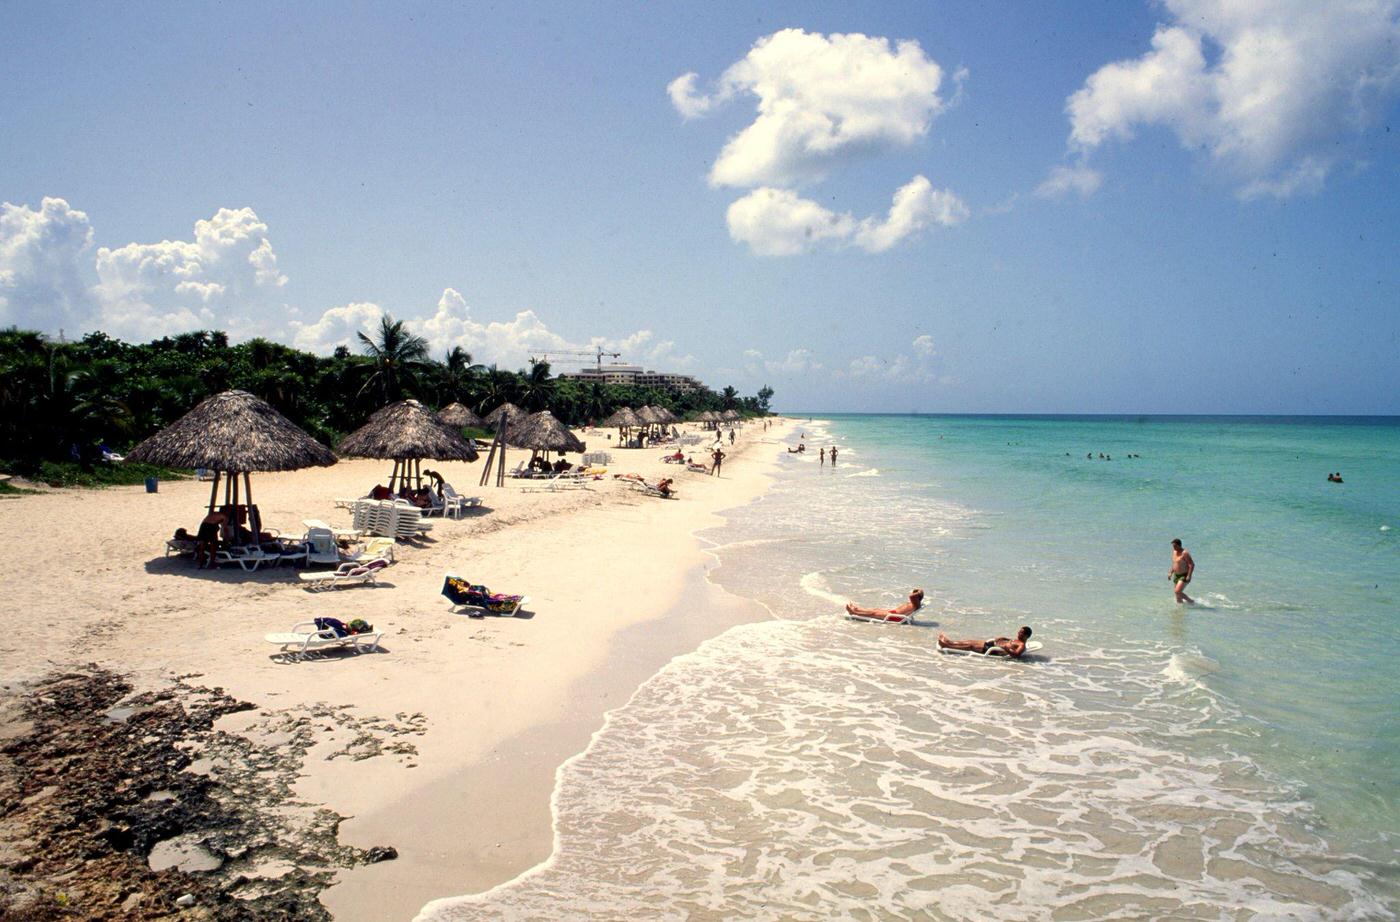 Varadero, a popular beach resort town in Cuba, 1991